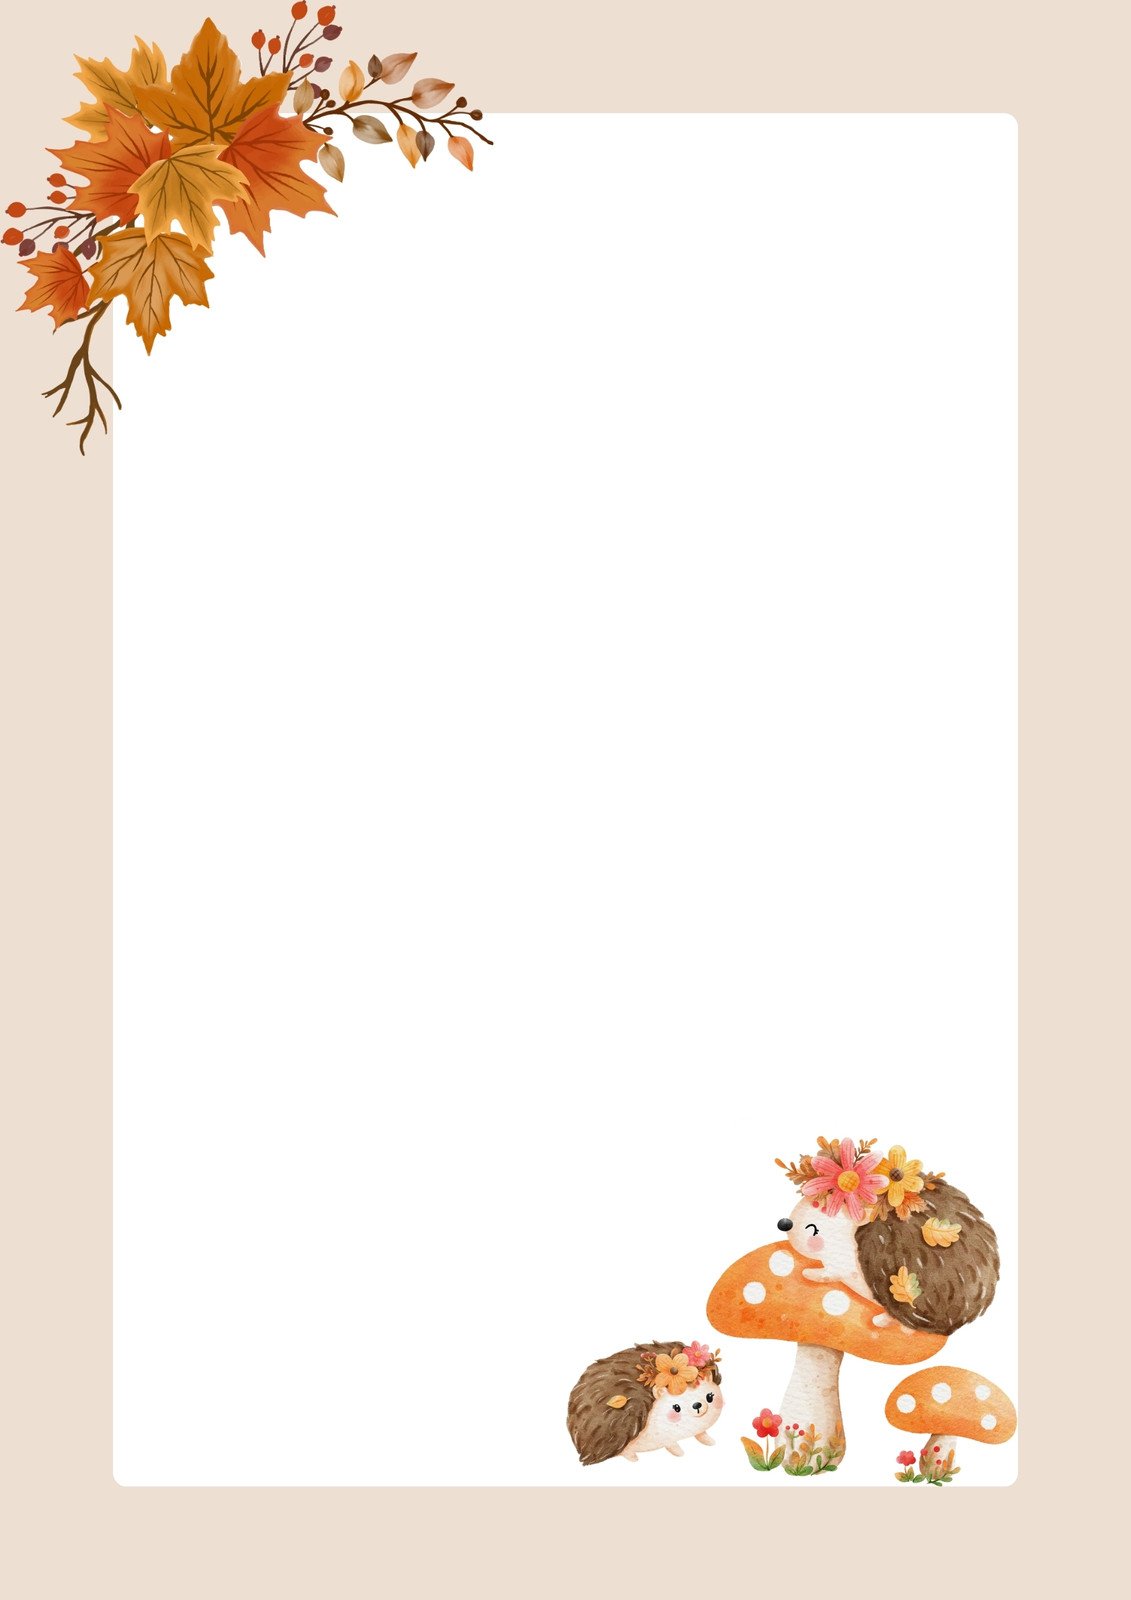 autumn leaf page border